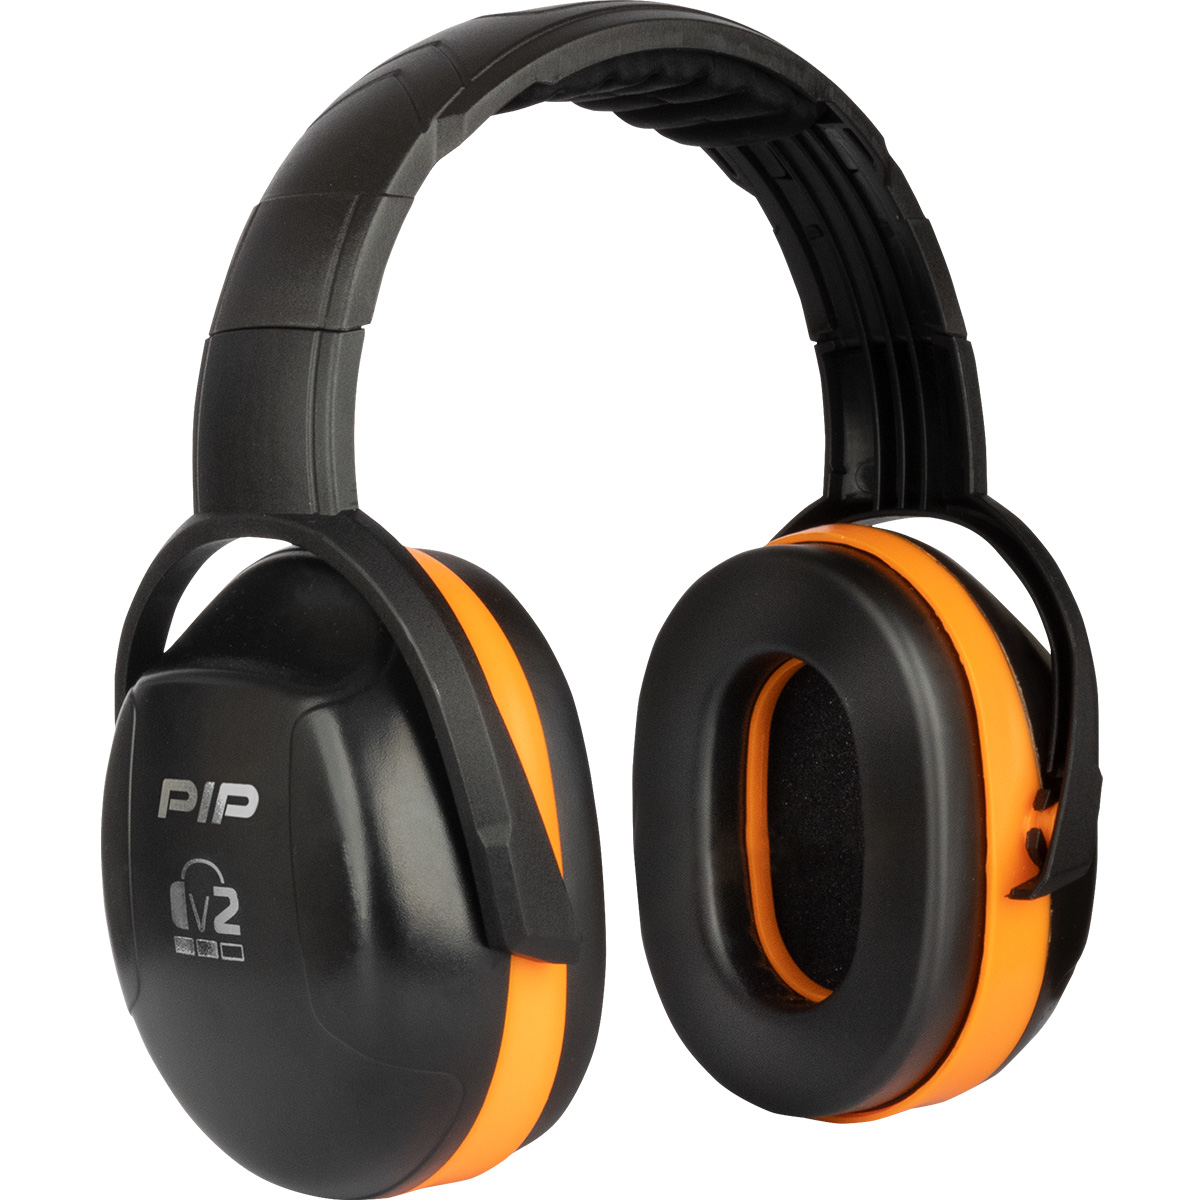 PIP V2 Ear Muff with Adjustable Headband NRR 25 263-V2HB